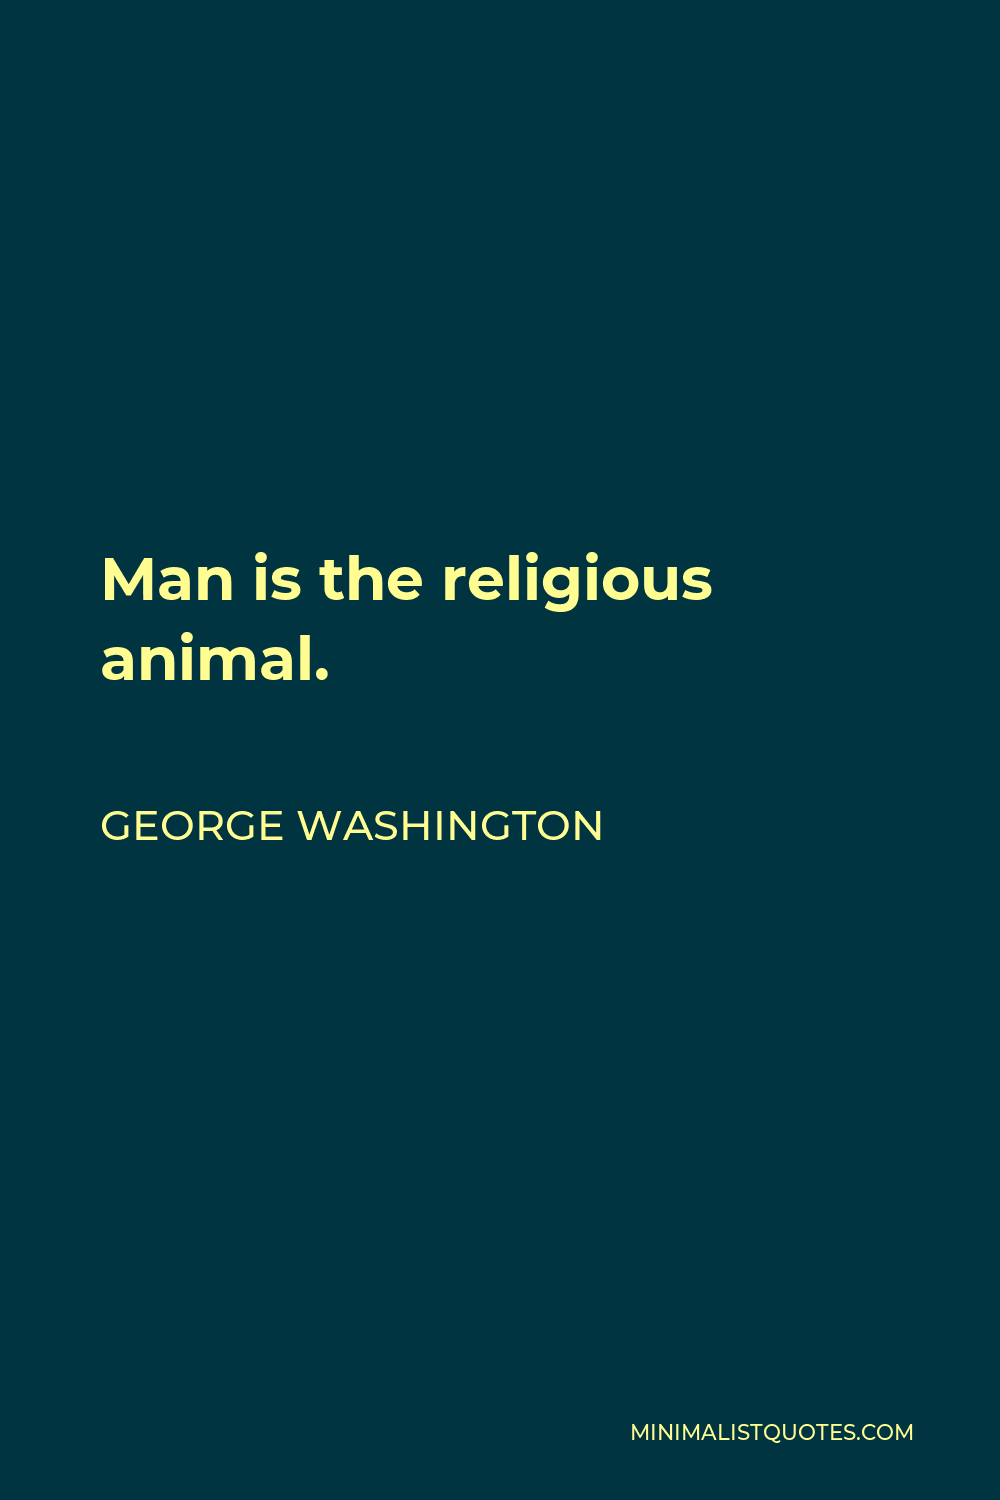 George Washington Quote - Man is the religious animal.